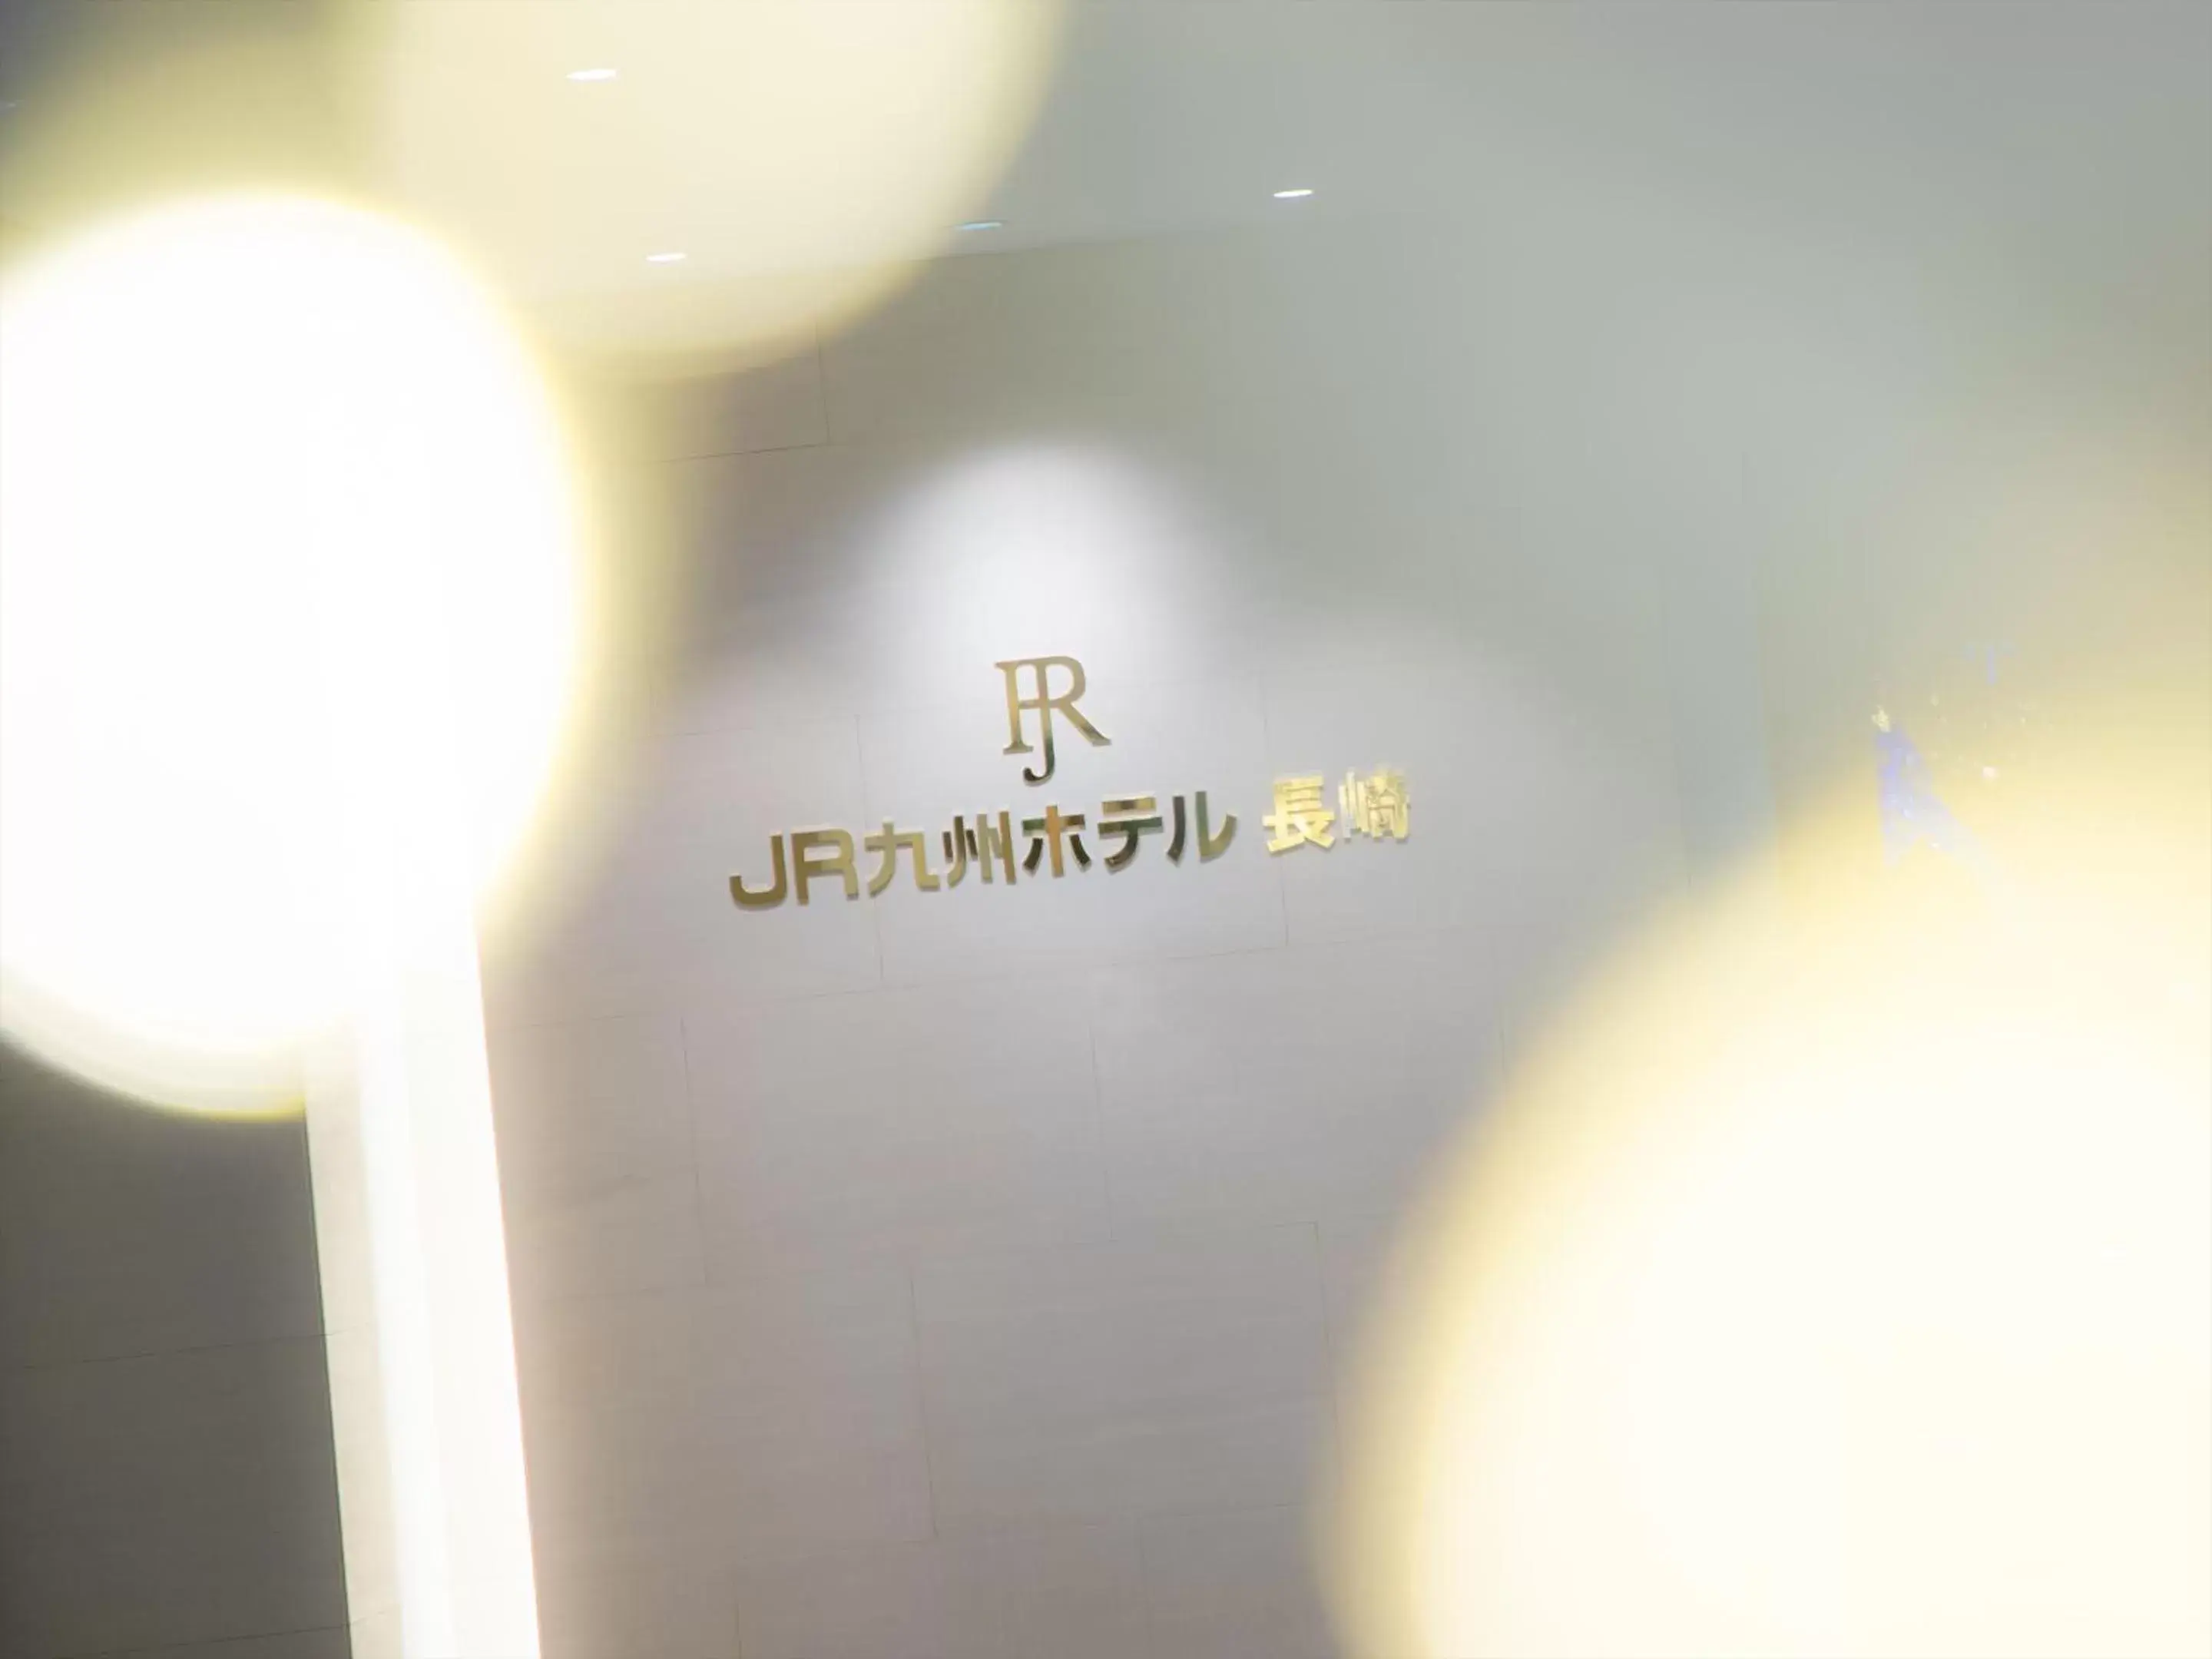 Property logo or sign, Property Logo/Sign in JR Kyushu Hotel Nagasaki